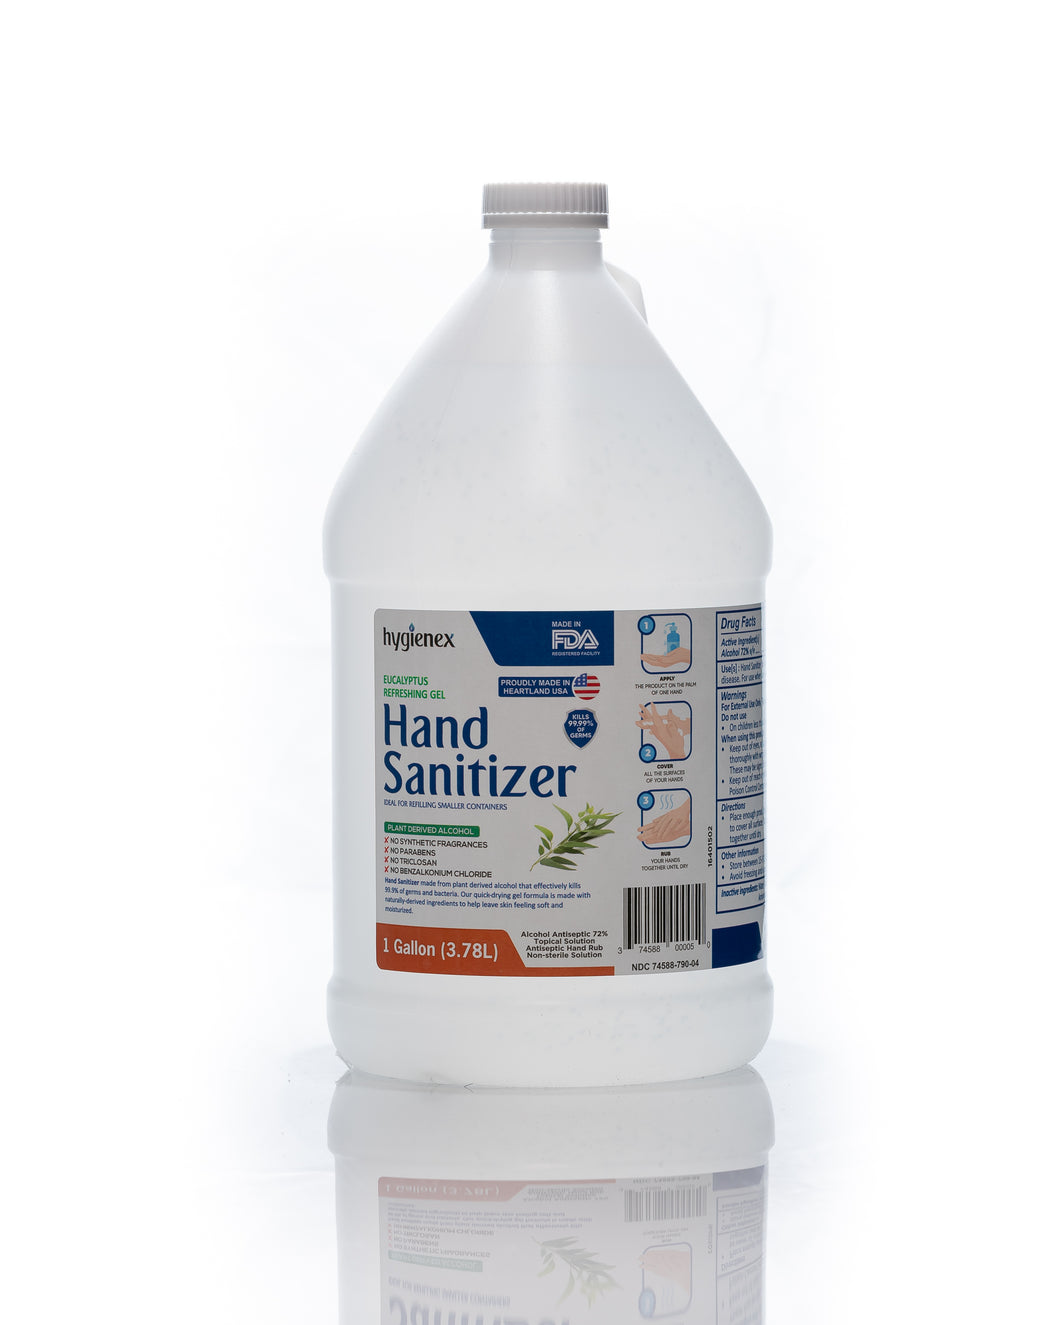 Hand Sanitizer - 1 Gallon Bottle without Pump